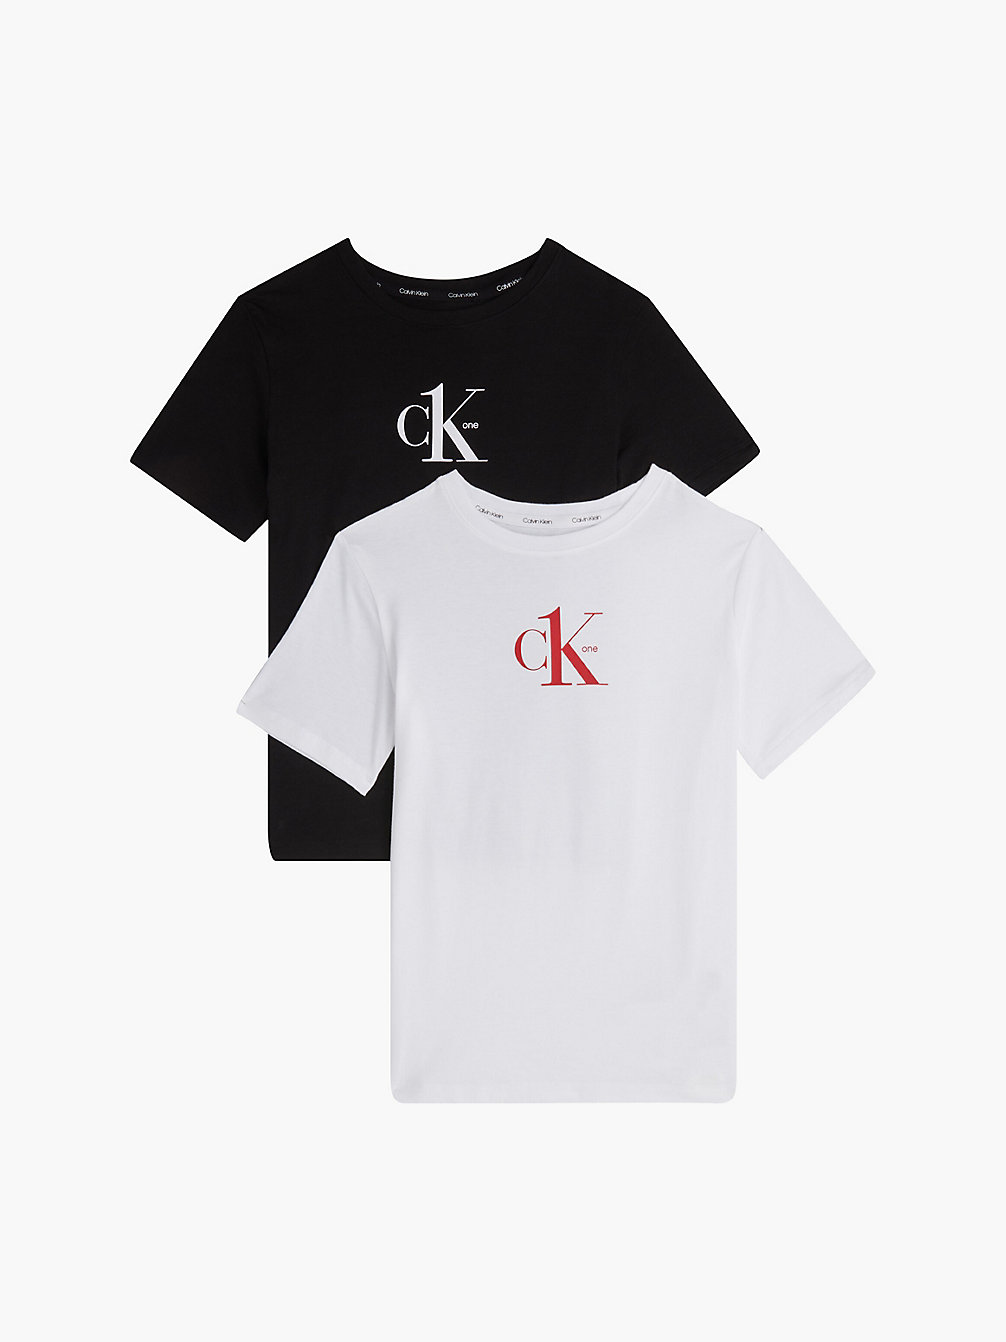 PVHBLACK/PVHWHITE > 2er-Pack Unisex T-Shirts – CK One > undefined kids unisex - Calvin Klein